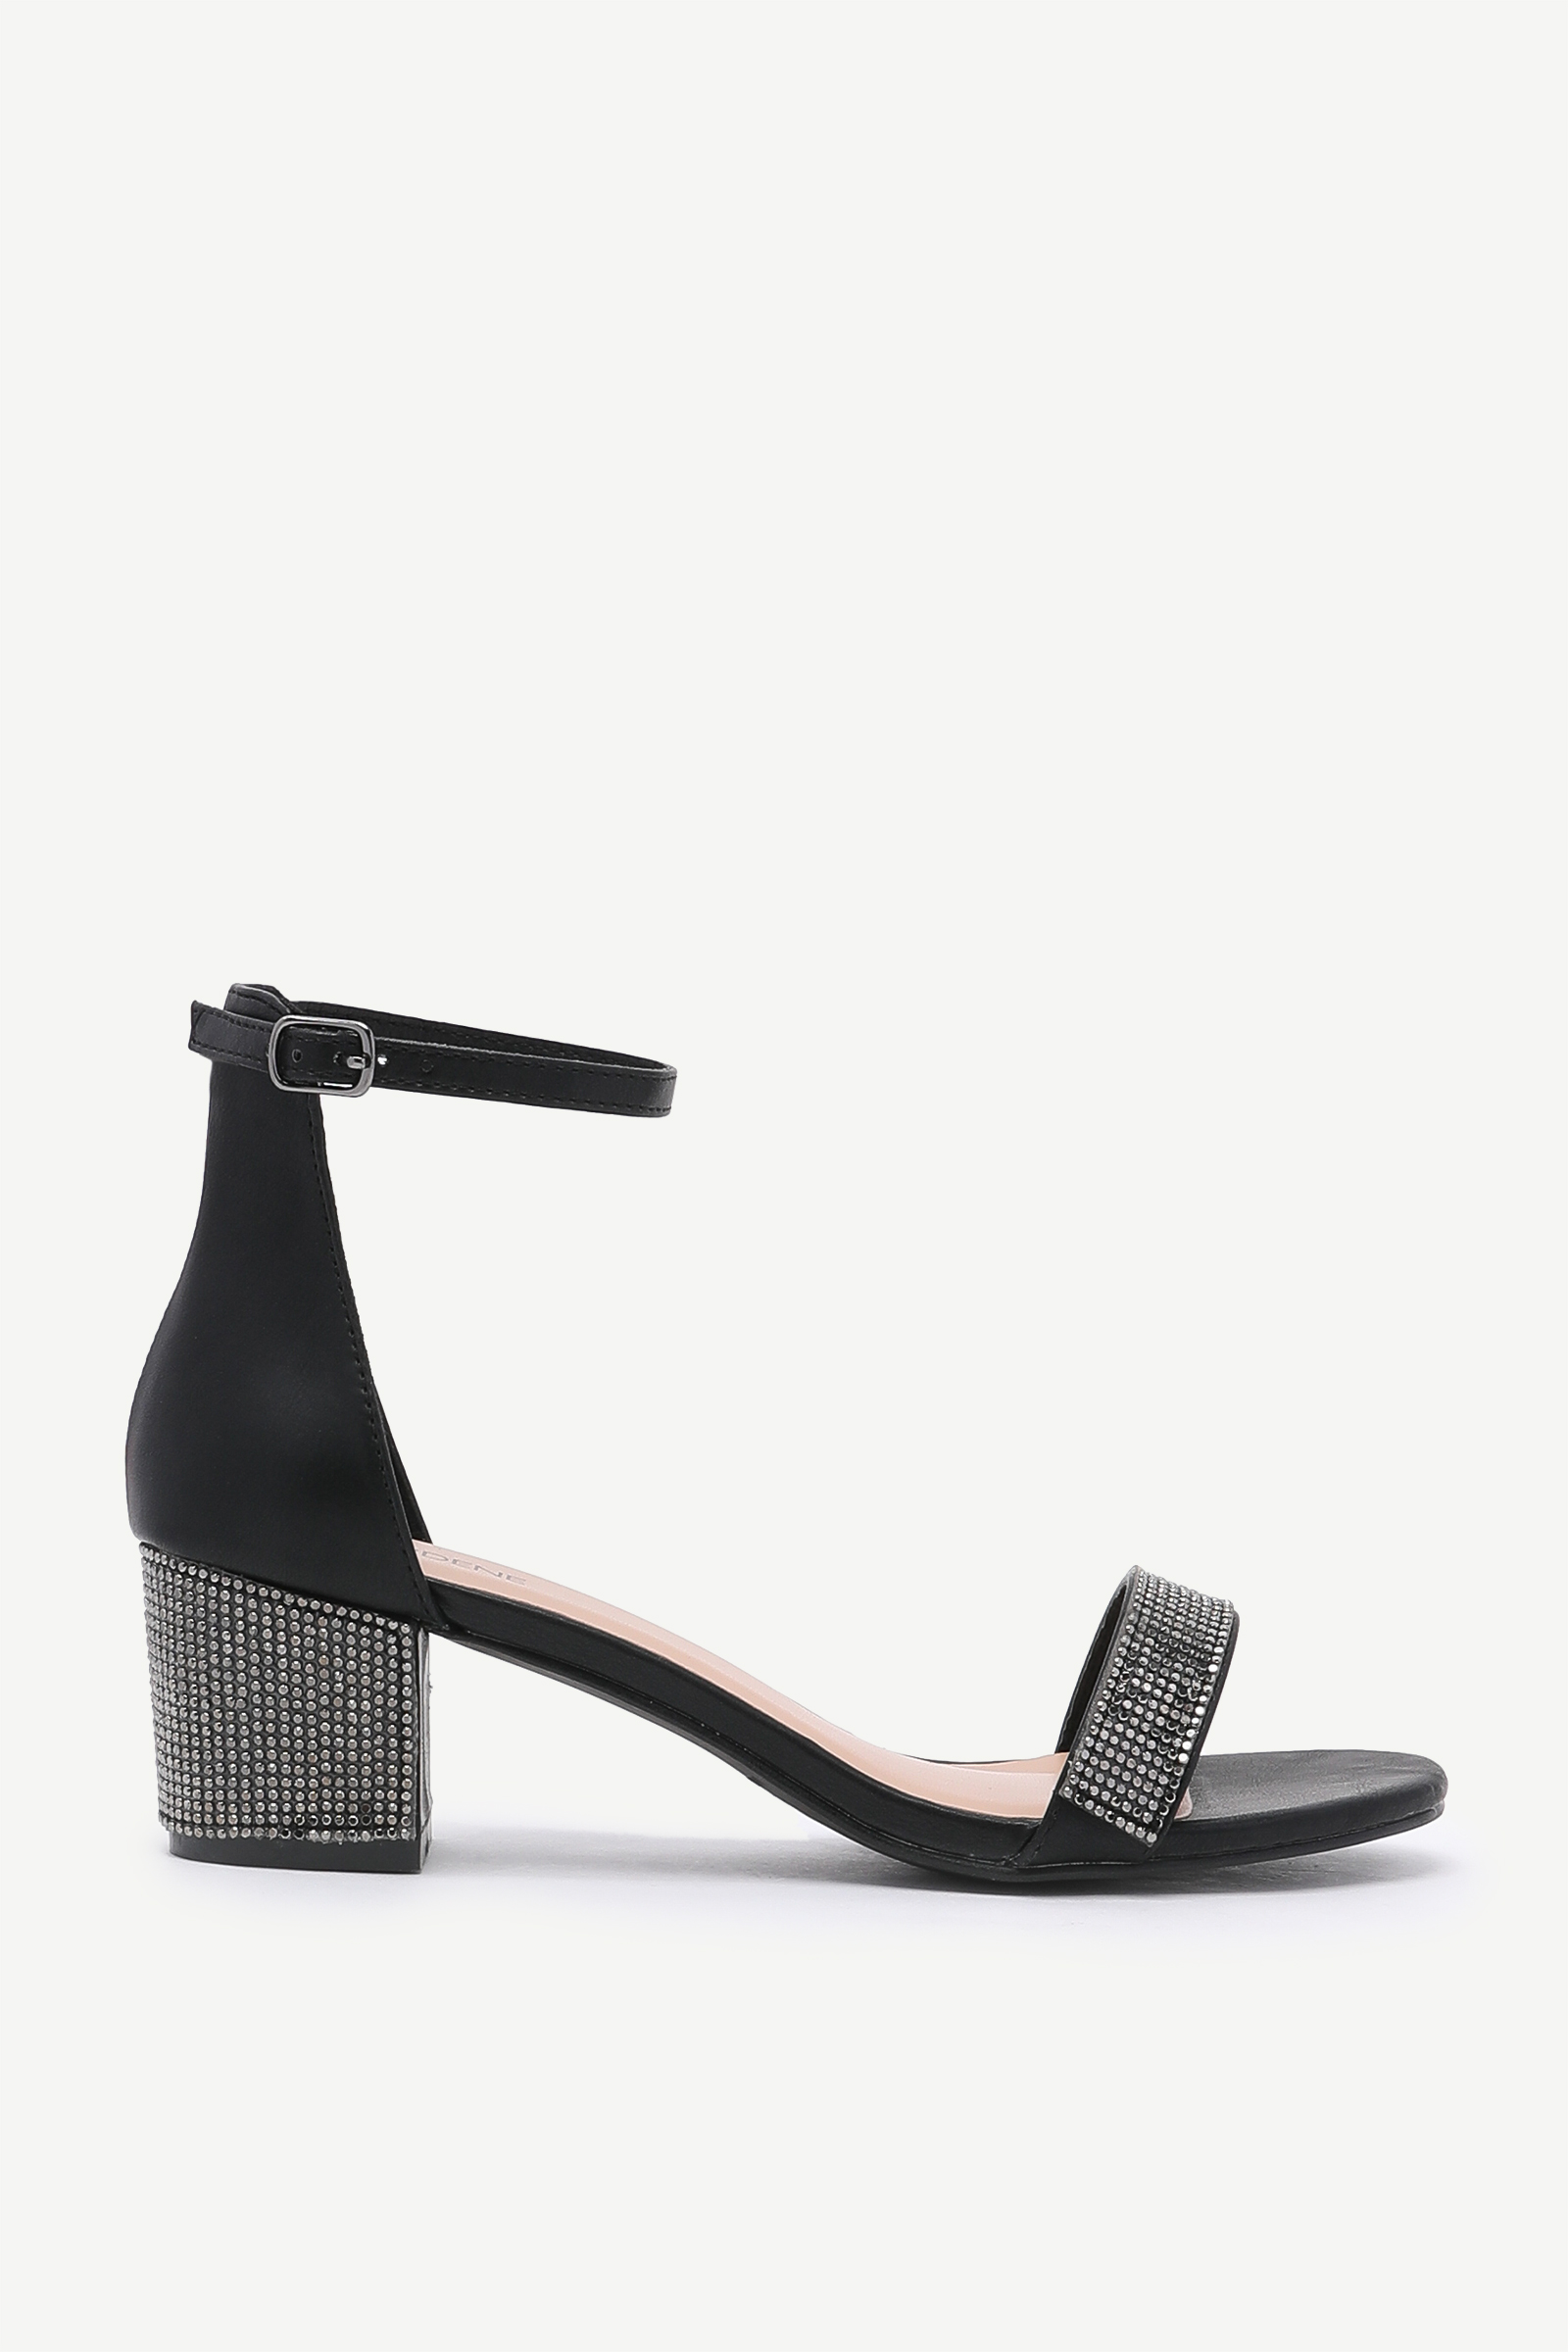 Ardene Gemstone Block Heel Sandals in Black | Women's Size 9 | Faux Leather/Rubber | Cushioned Insole